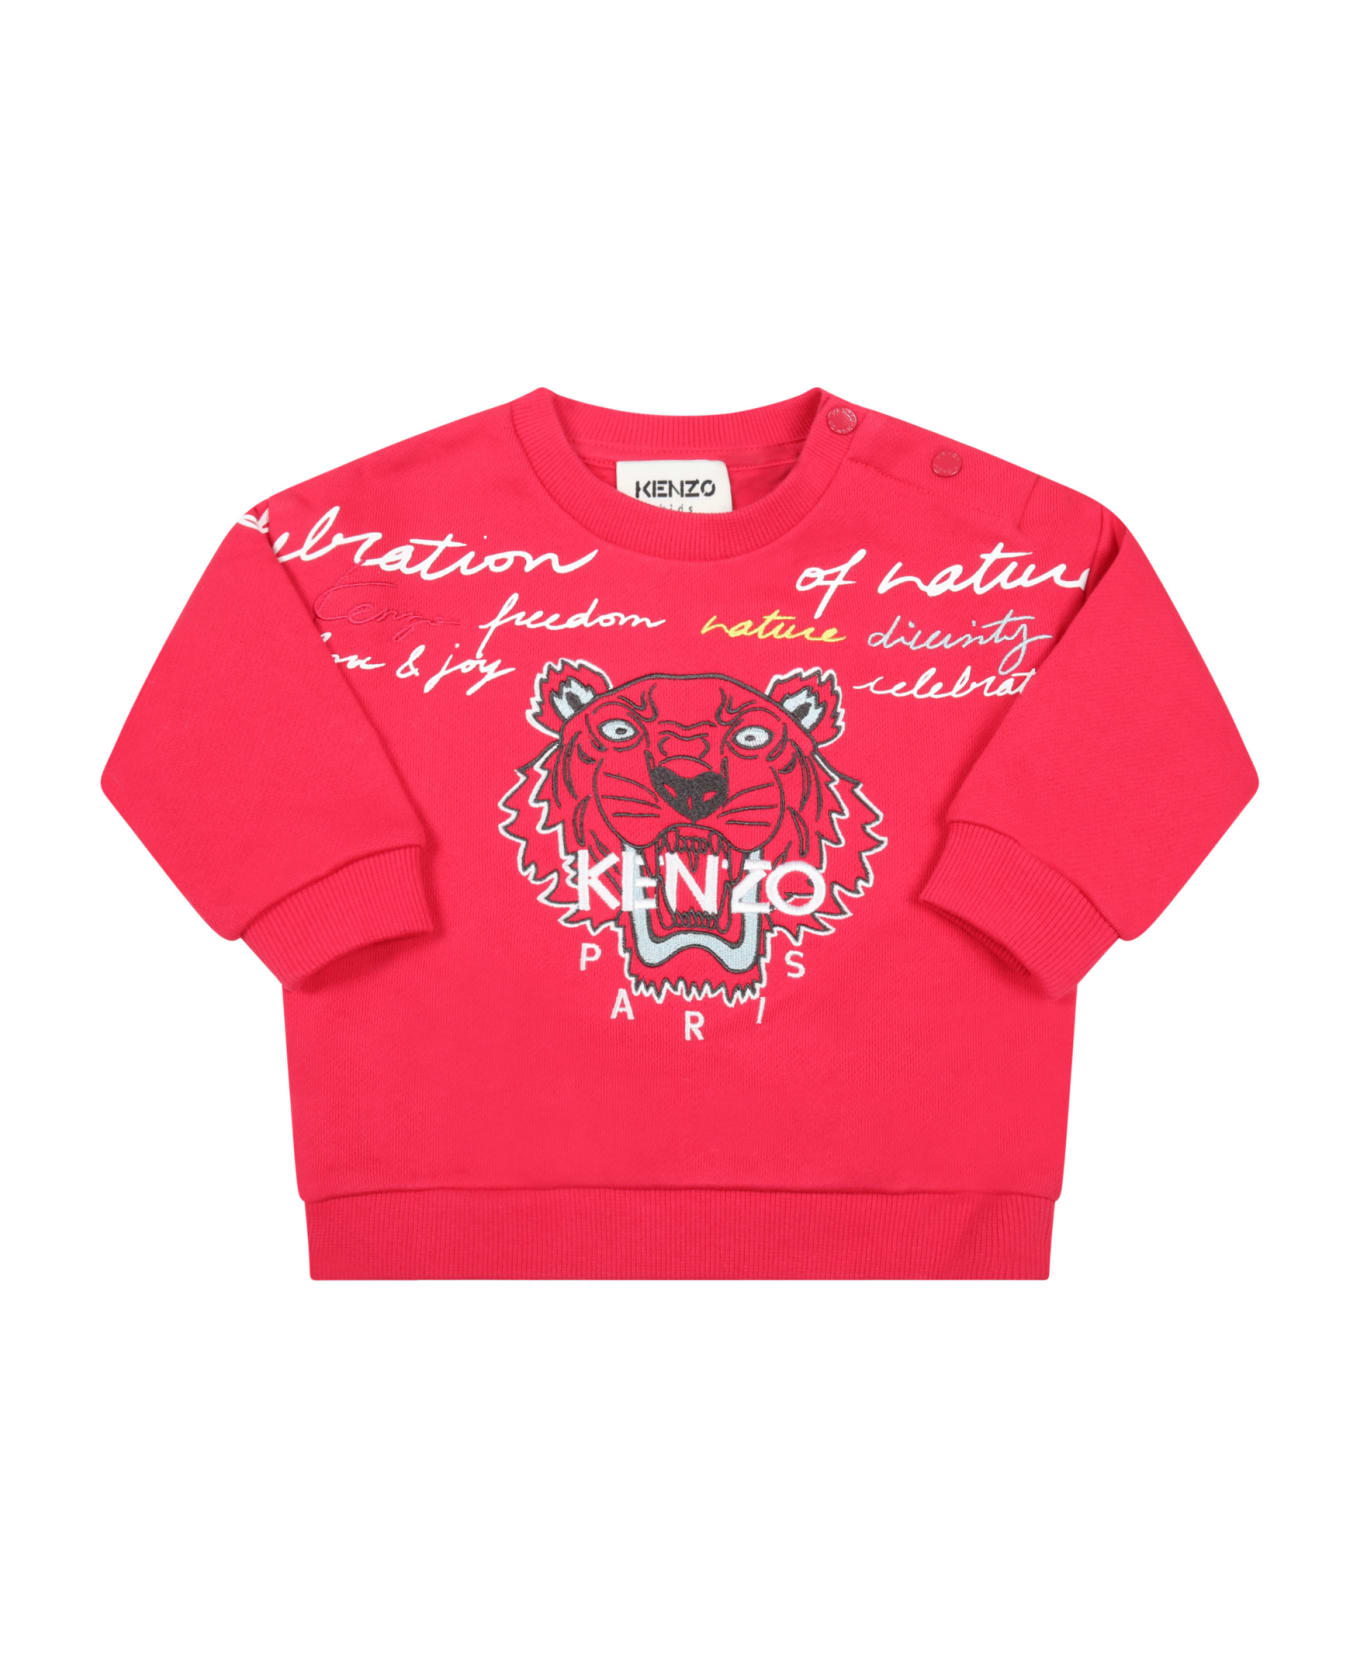 Kenzo Kids Fuchsia Sweatshirt For Baby Girl With Tiger - Red